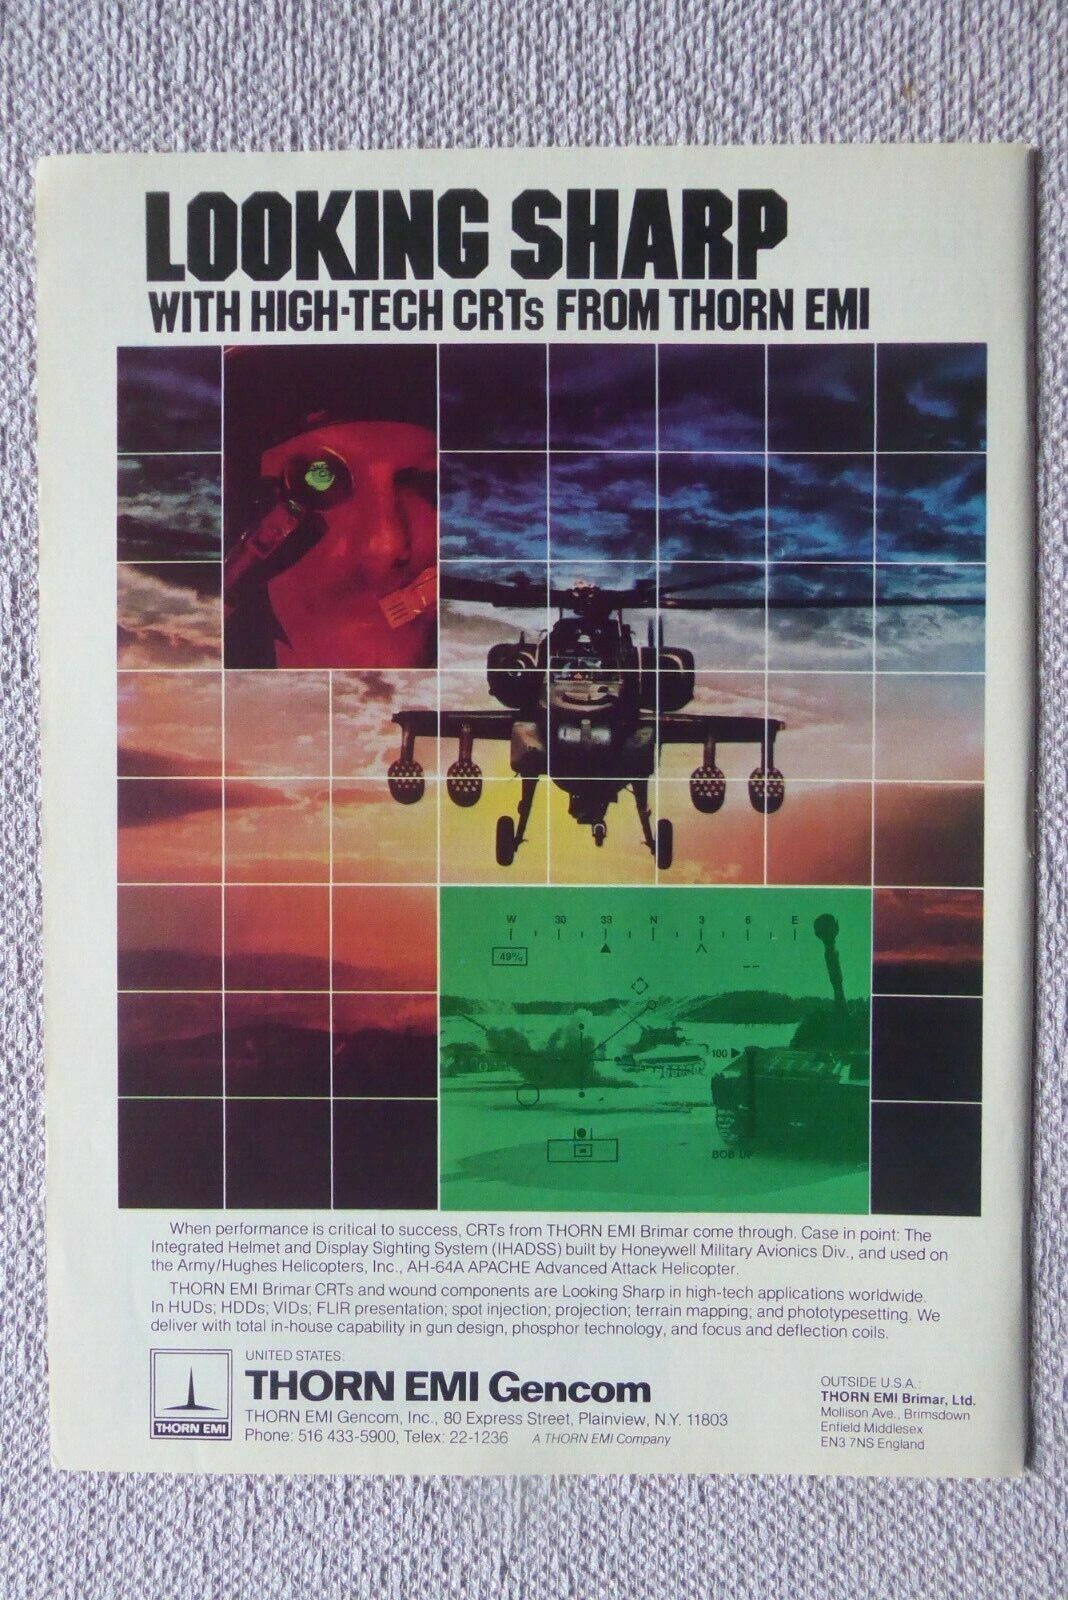 9/1983 PUB THORN EMI GENCOM CRT HONEYWELL IHADSS HELMET AH-64 APACHE ORIGINAL AD